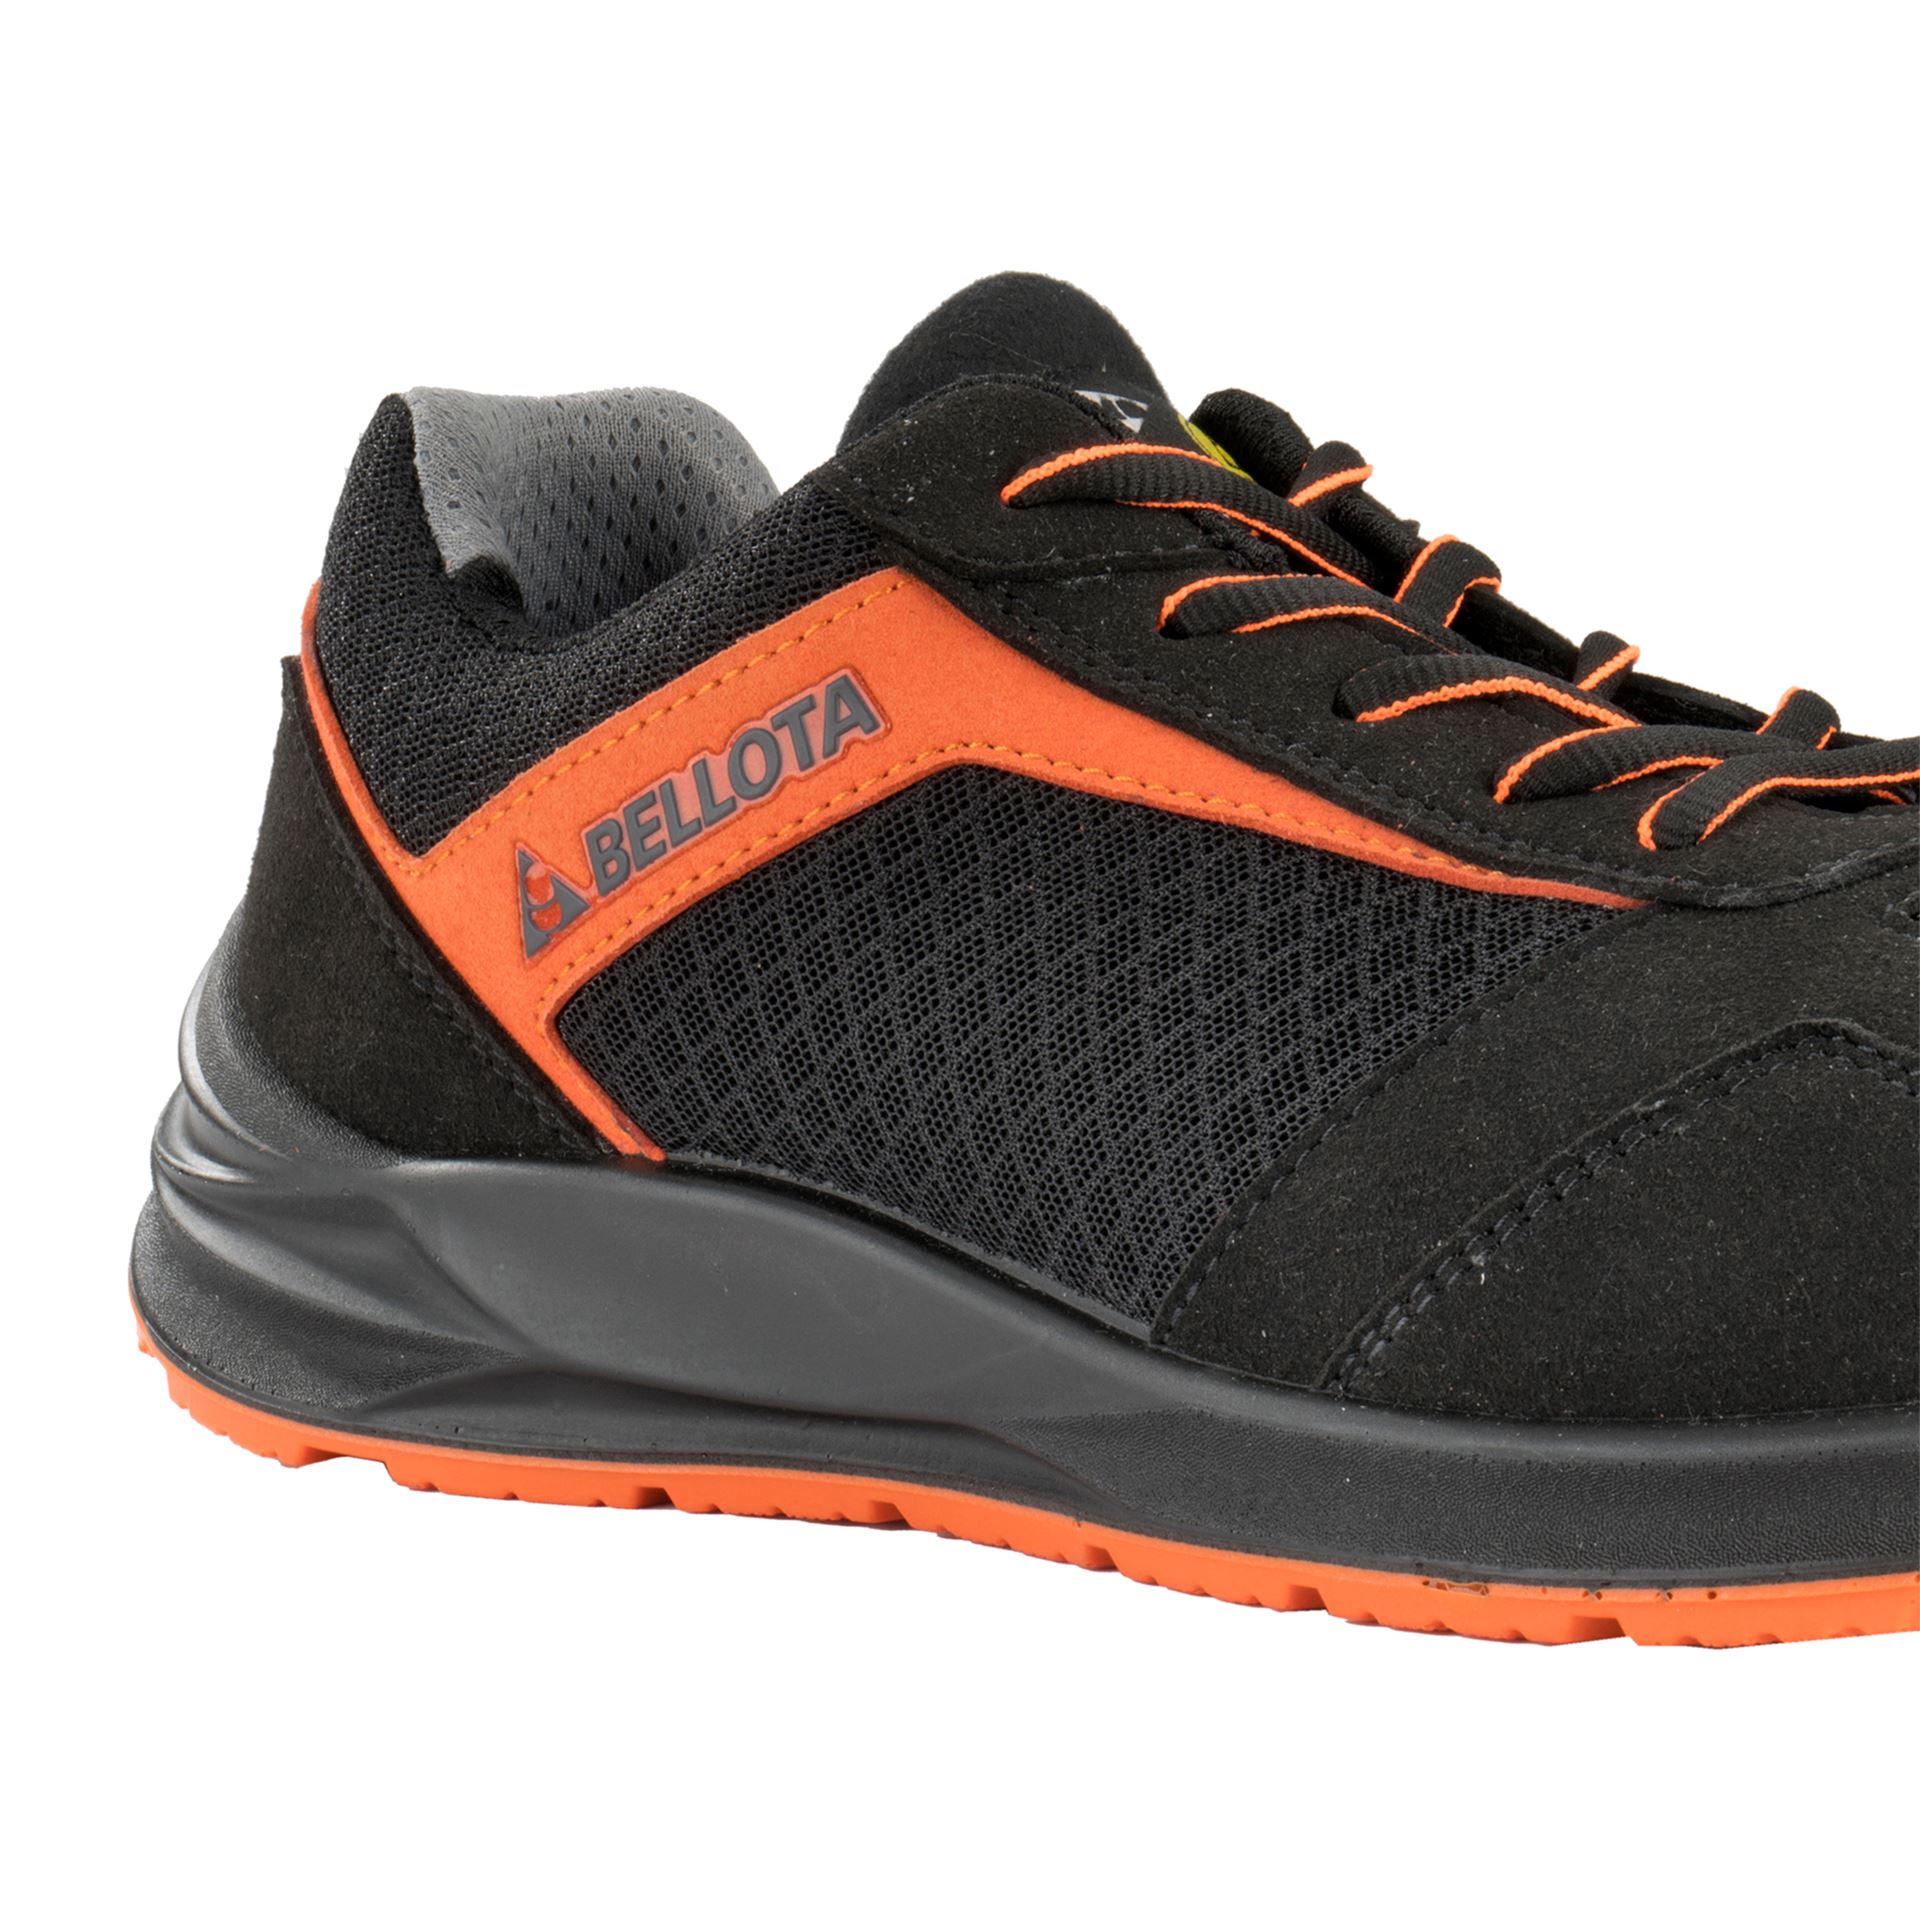 Zapato seguridad S1P Bellota negro-naranja FTW05 - Suministros Urquiza